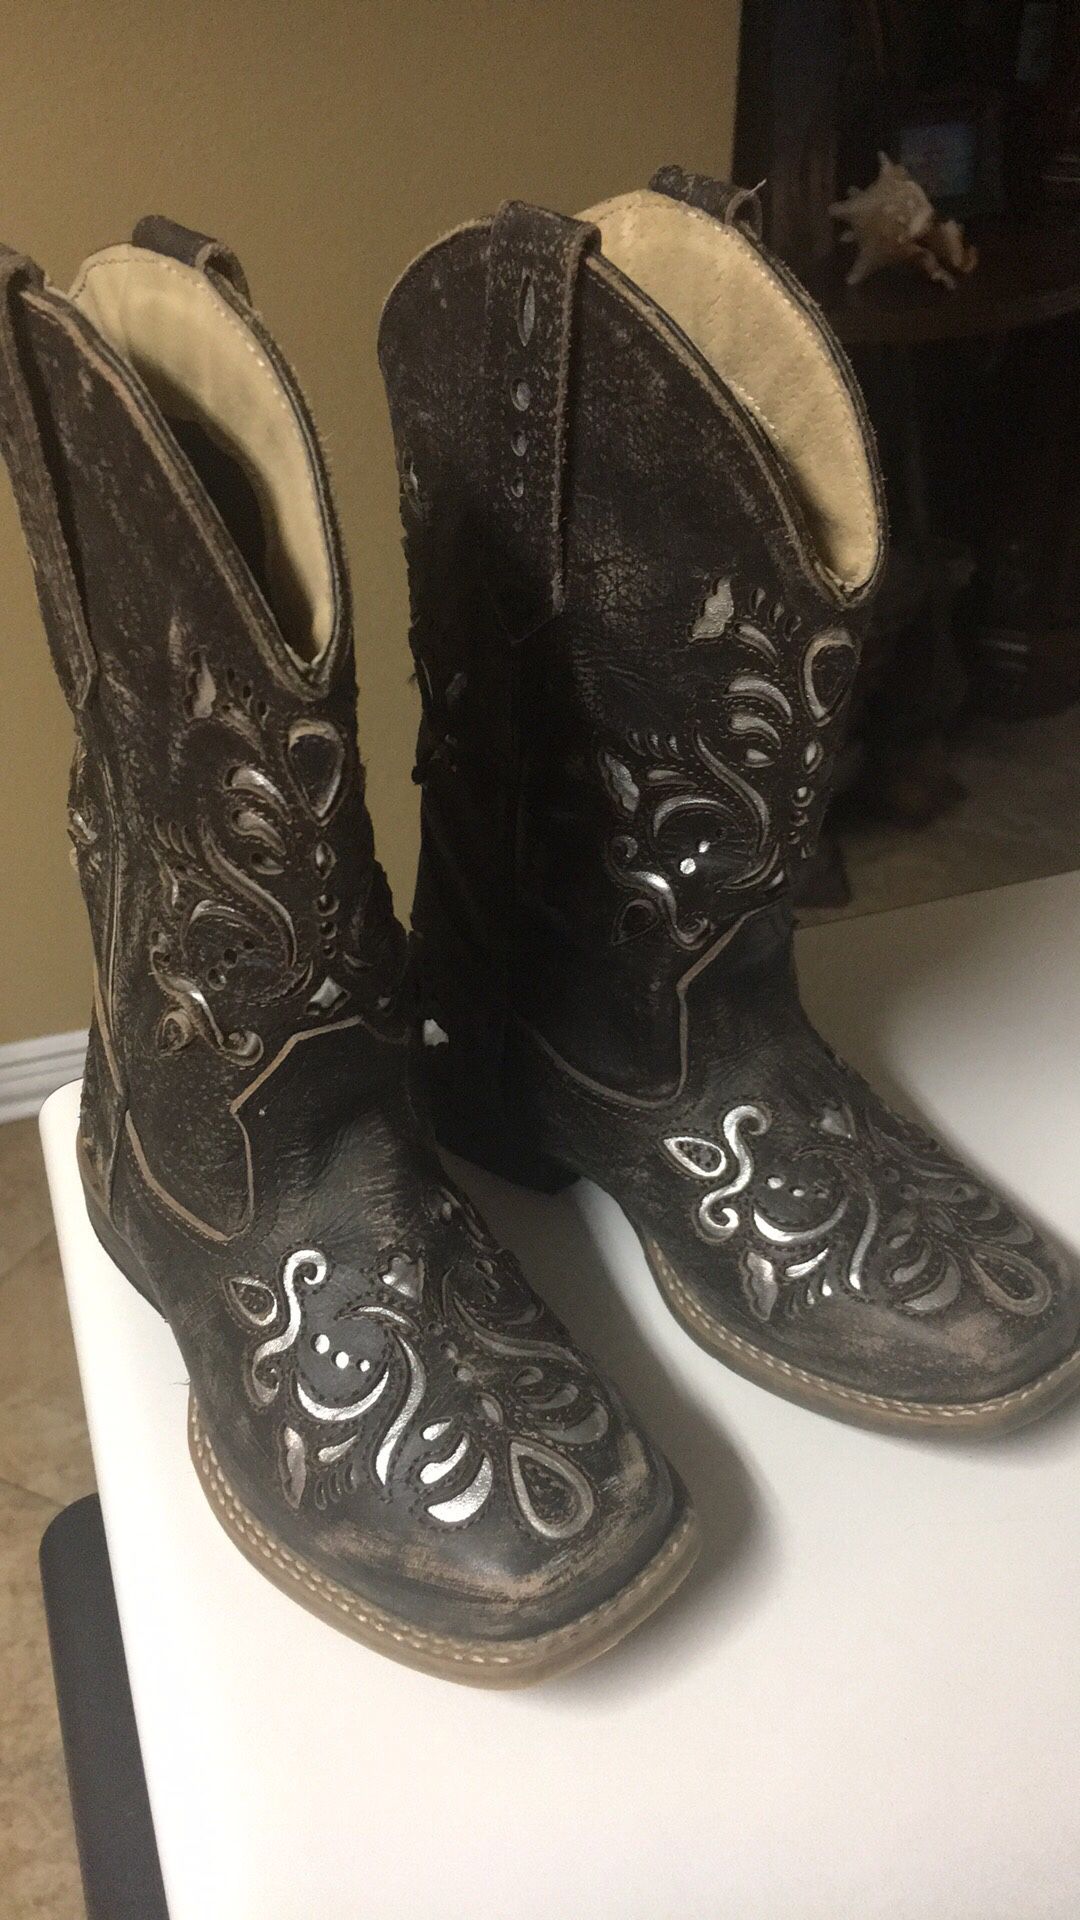 Roper girls cowboy boots size 11